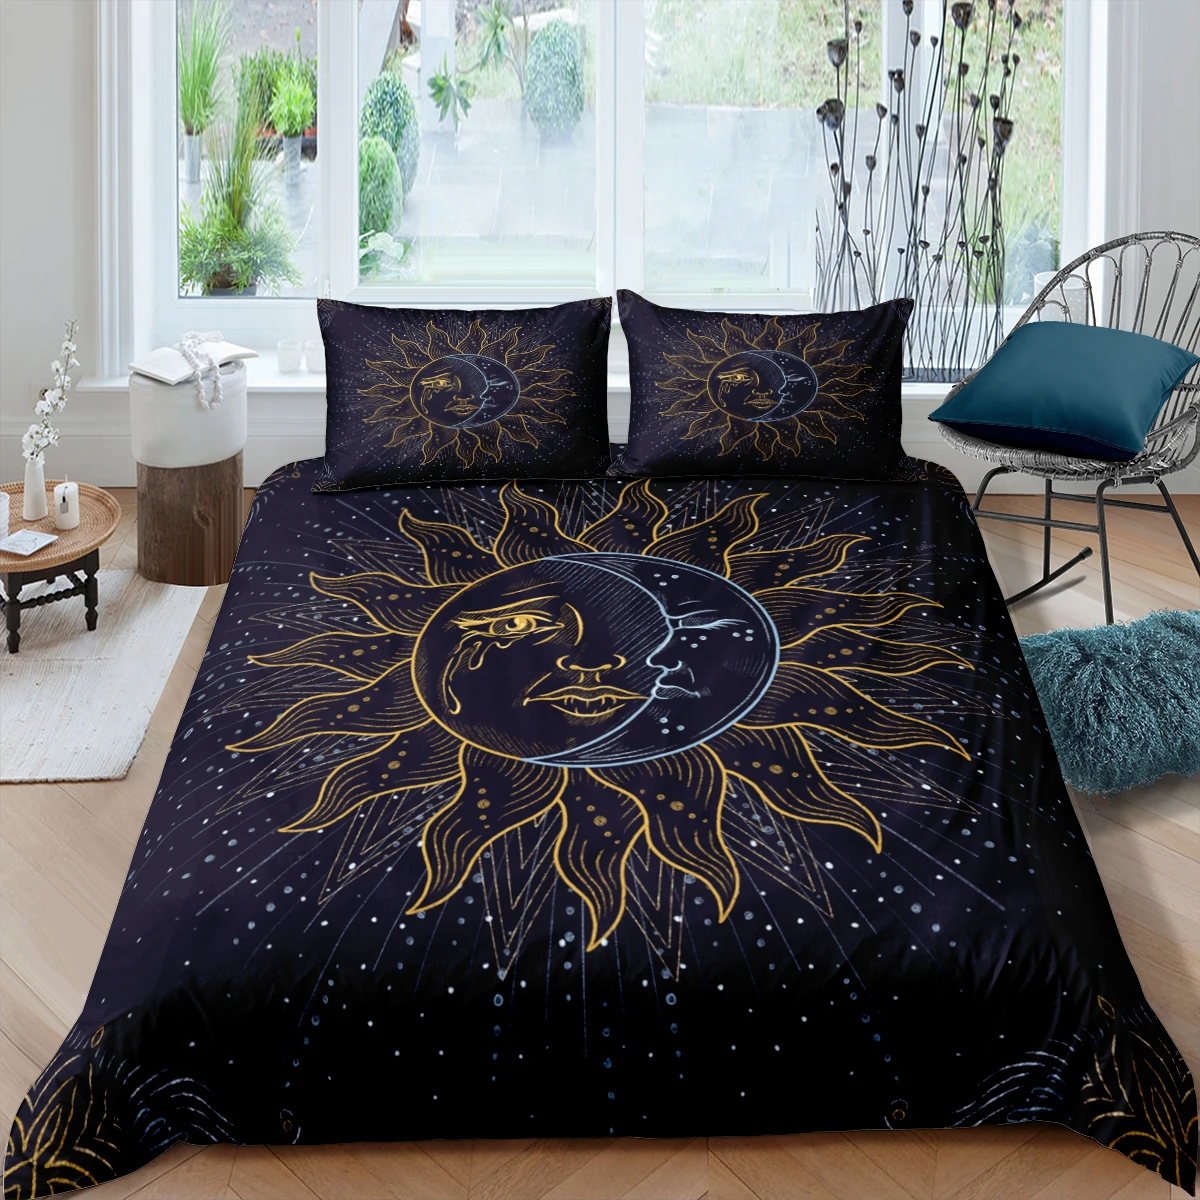 Home Textiles Luxury 3D Sun Moon Duvet Cover Set Pillowcase Tarot Bedding Set Queen and King Size Comforter Bedding Set